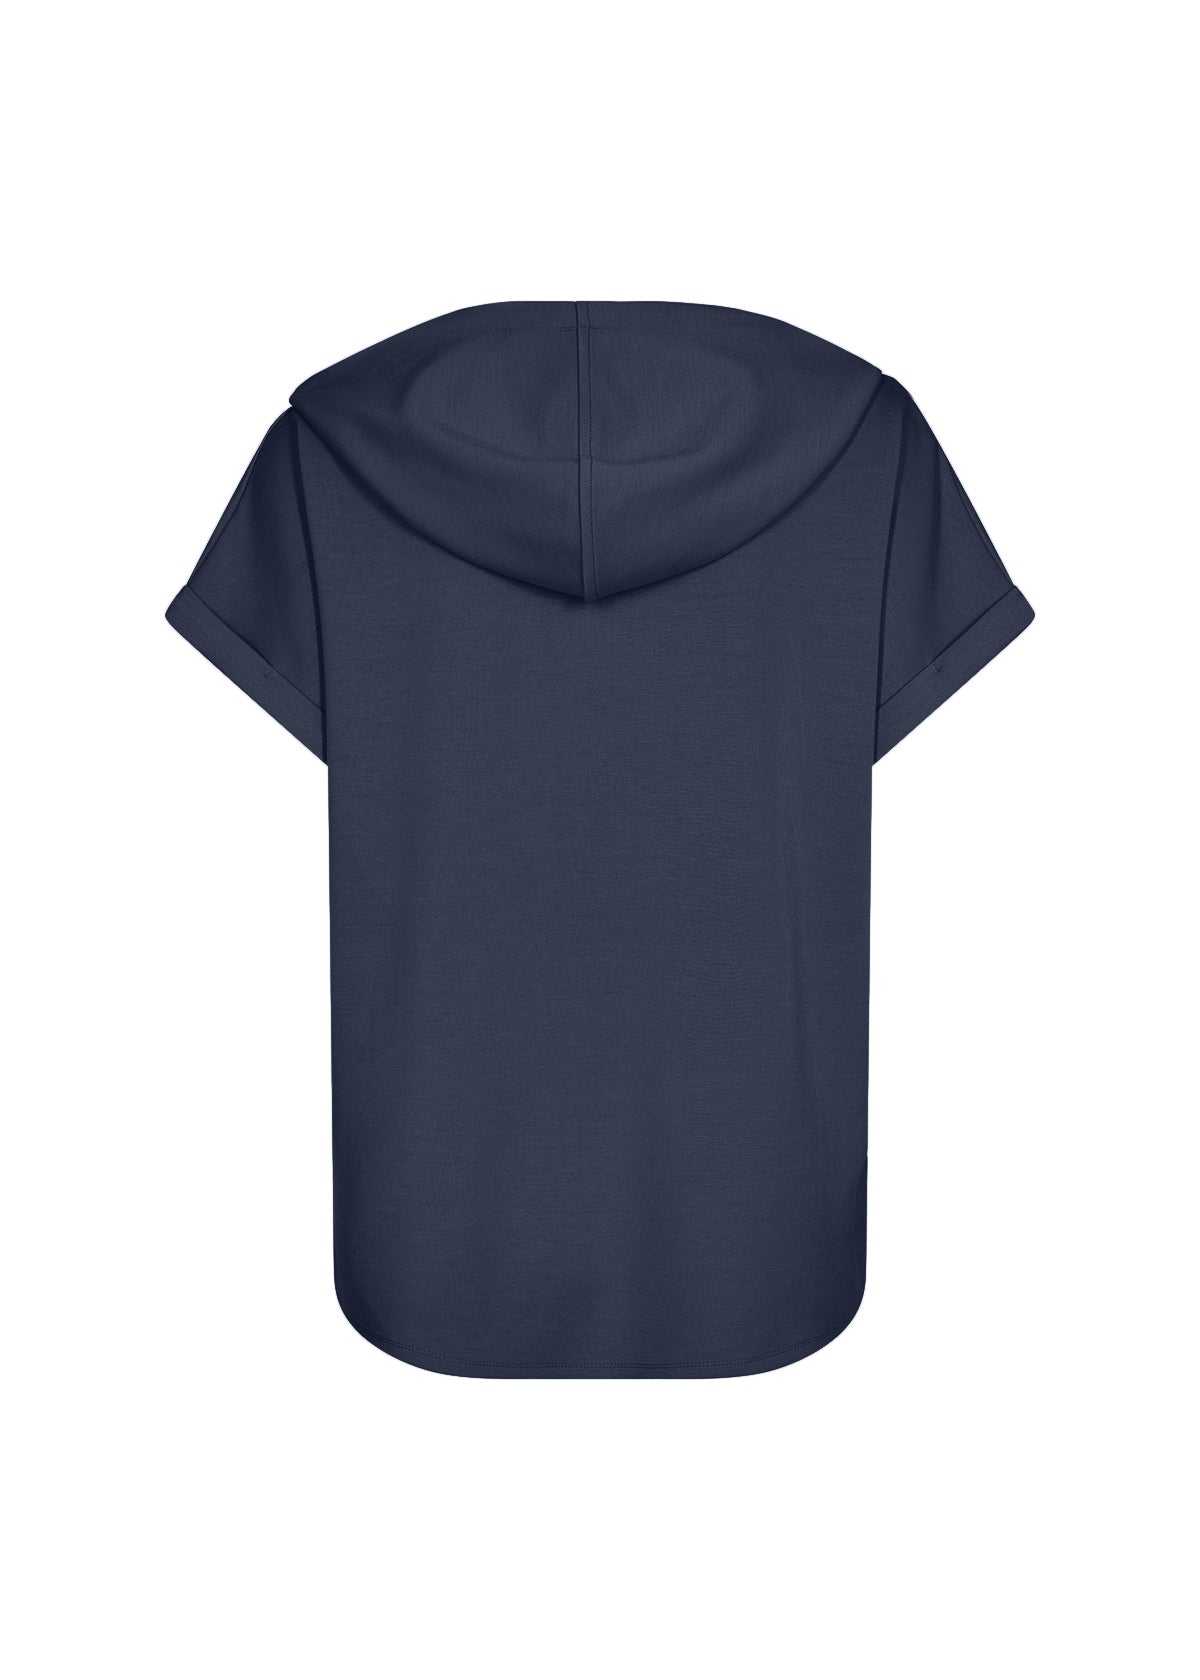 SOYA CONCEPT Banu 143 Navy Modal Short Sleeve Sweatshirt